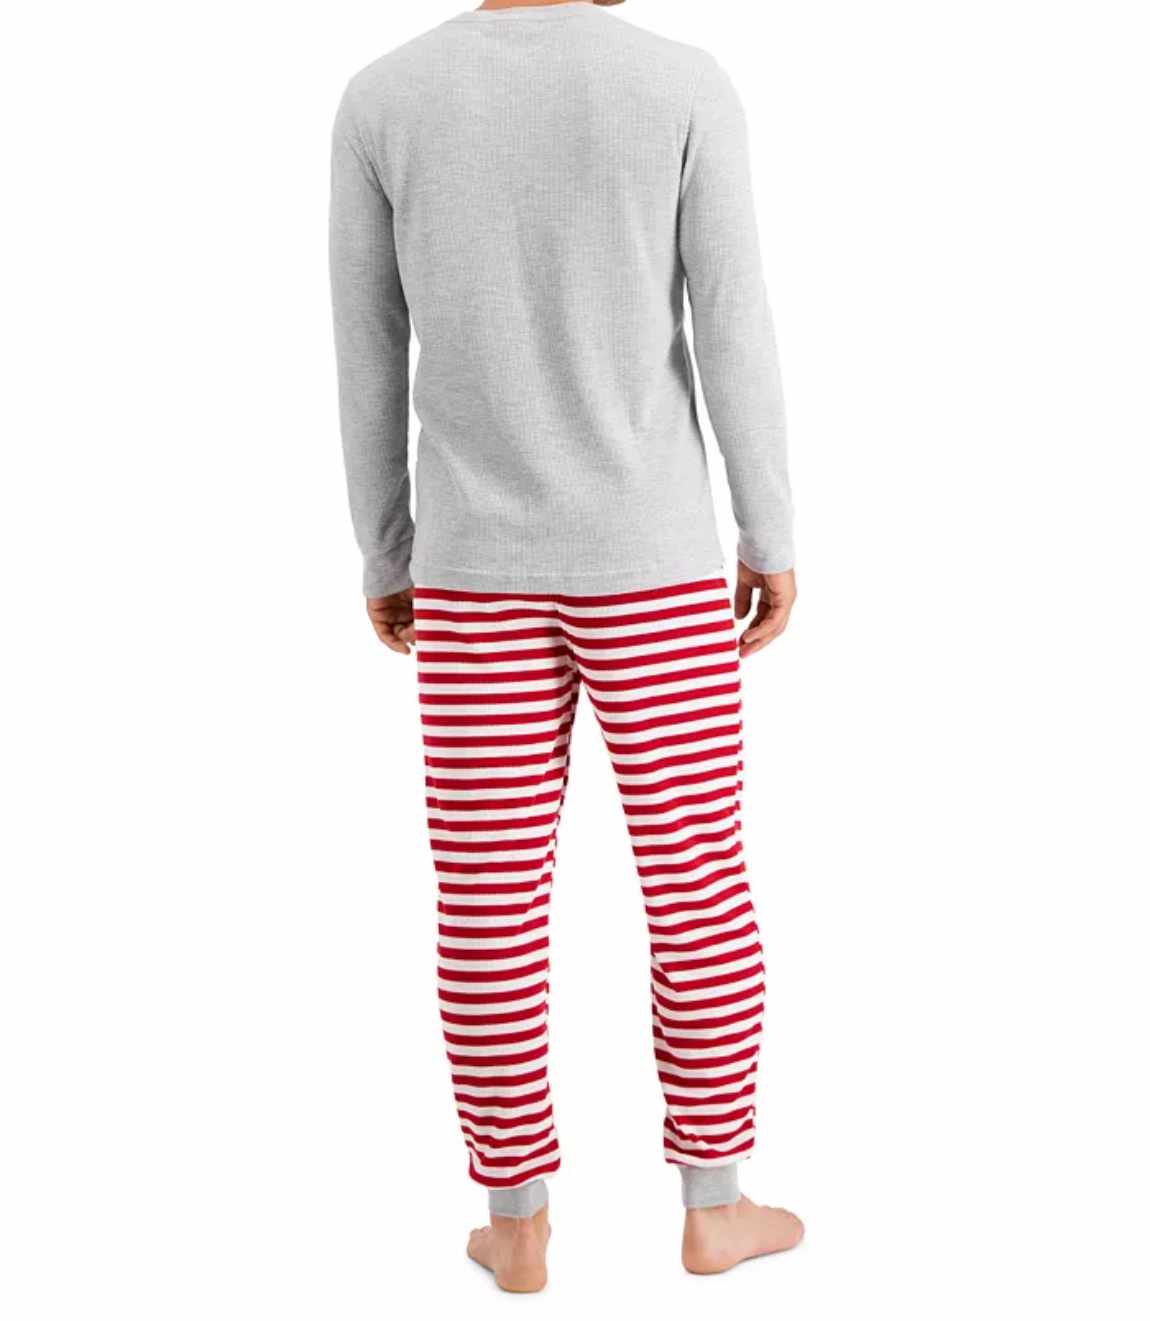 Family Pajamas Mens Matching Solid Top & Striped Pants Thermal Pajama Set